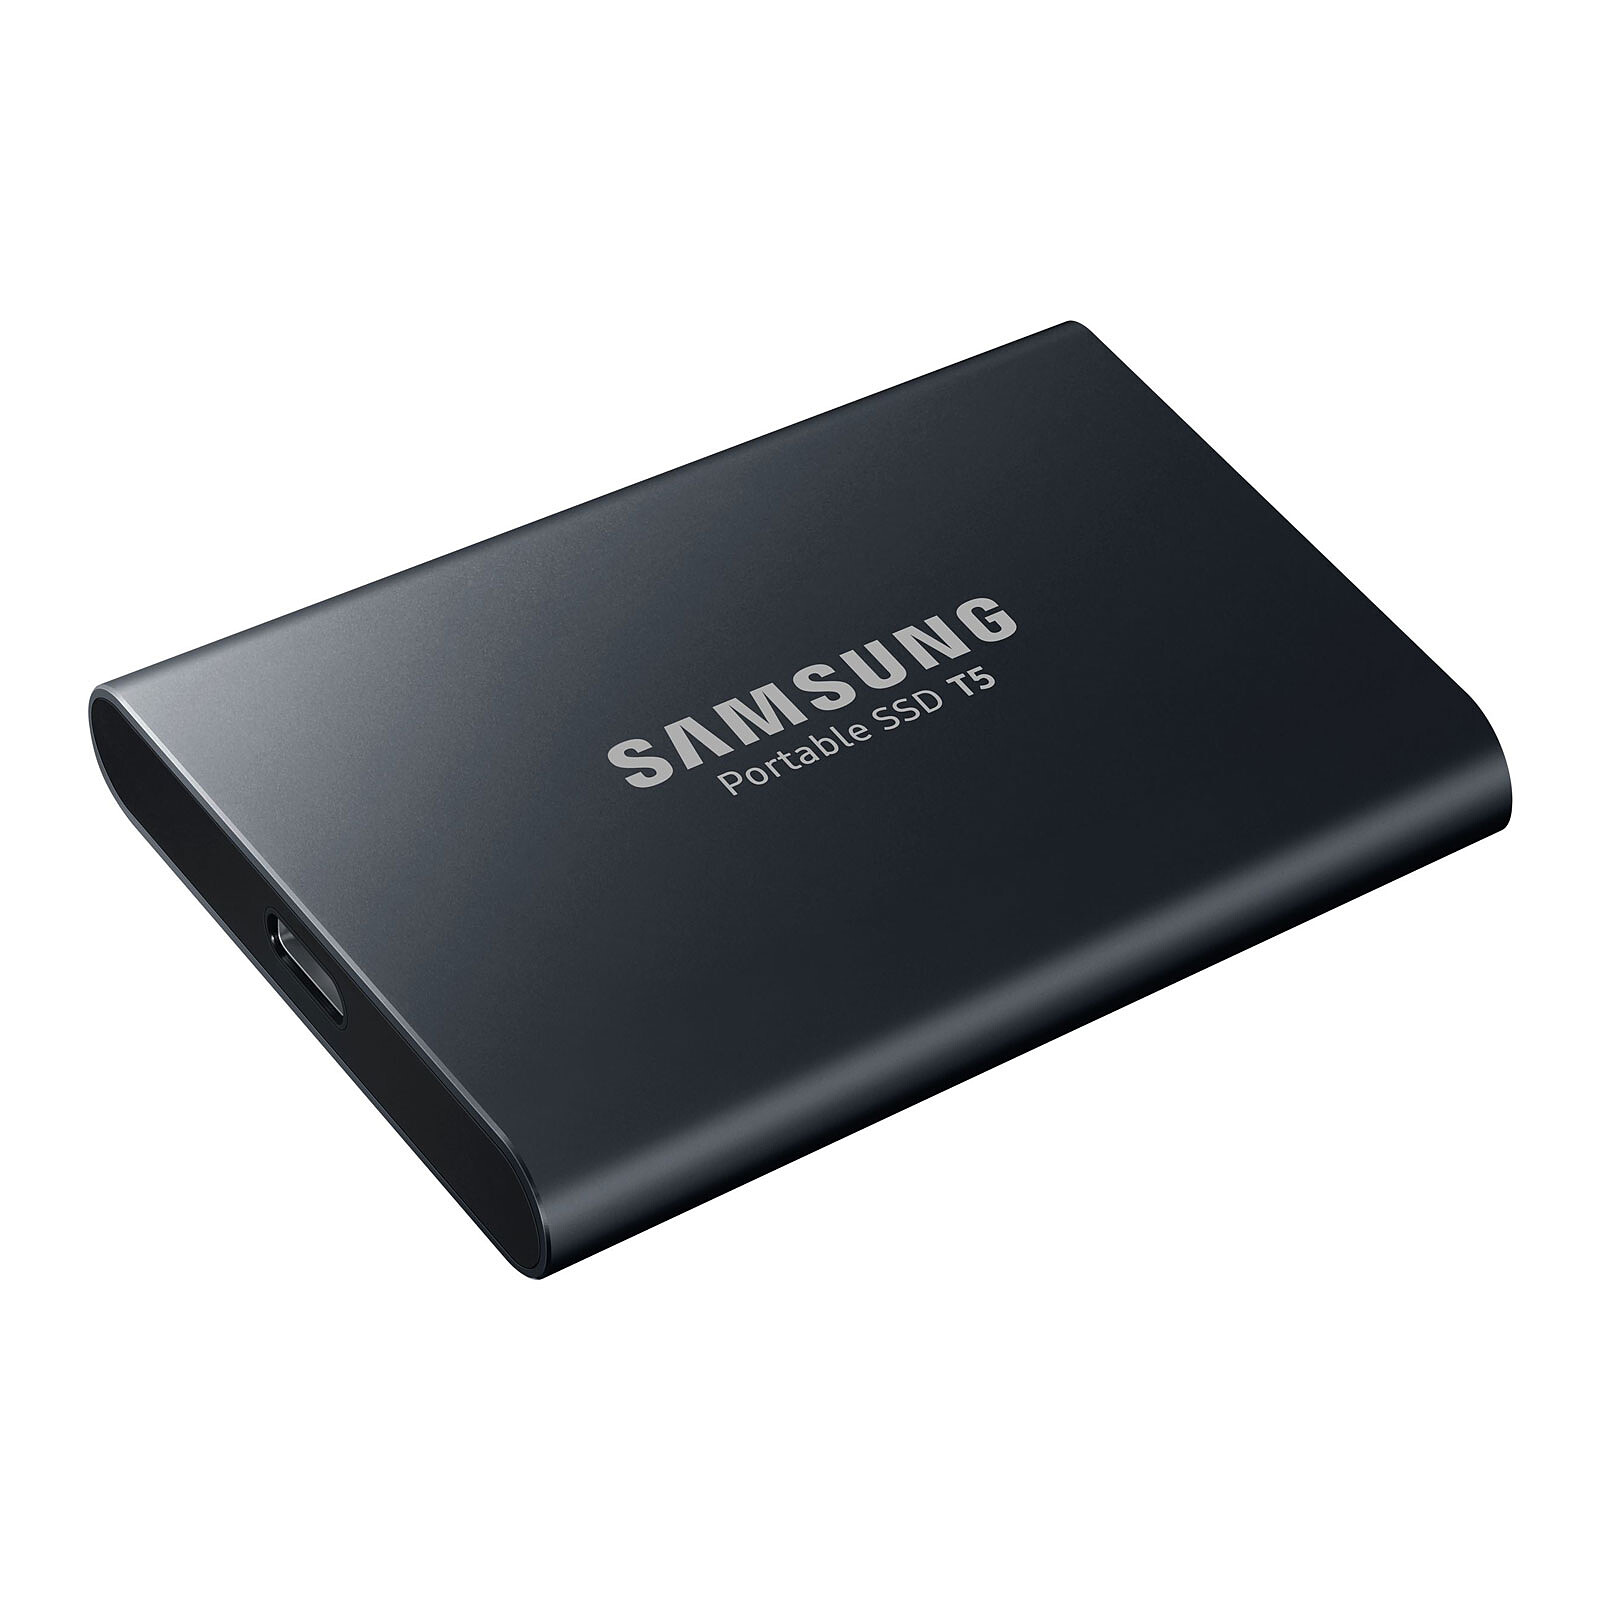 cesar Orbita Consejo Samsung SSD Portable T5 1 TB - Disco duro externo Samsung en LDLC |  ¡Musericordia!